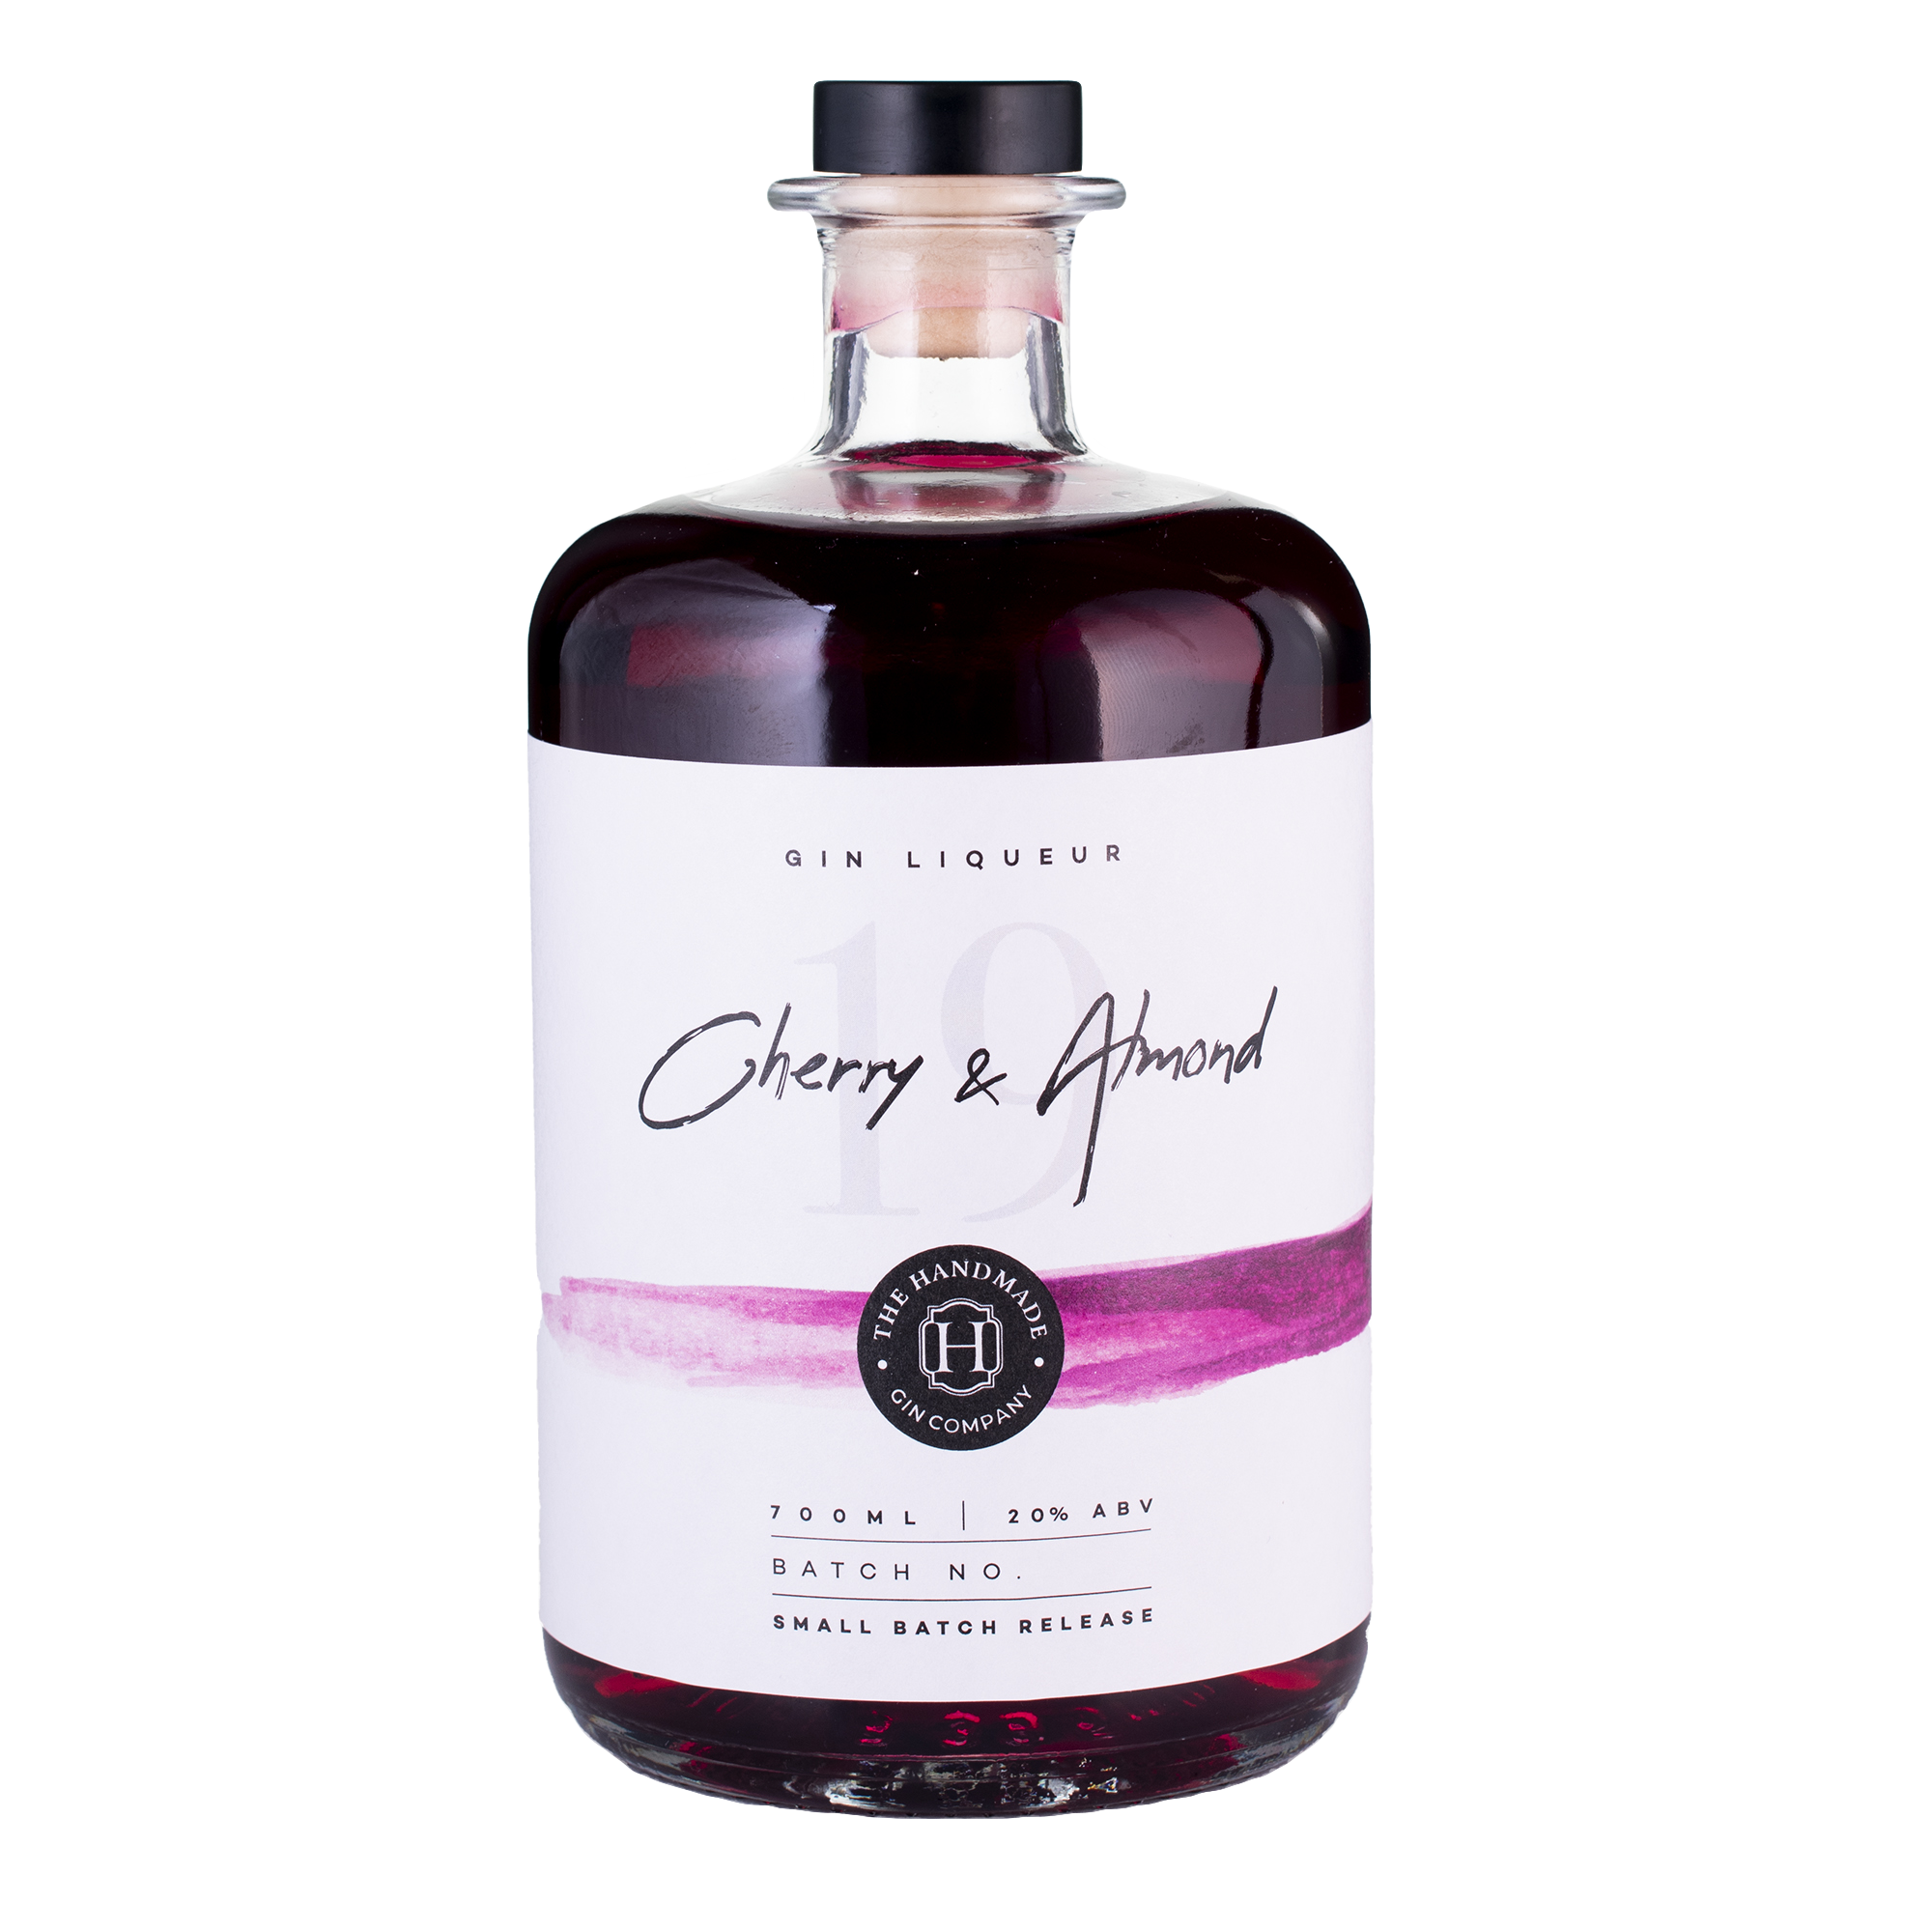 Handmade Cherry The & Bakewell Liqueur Gin Company Handmade Gin Almond –